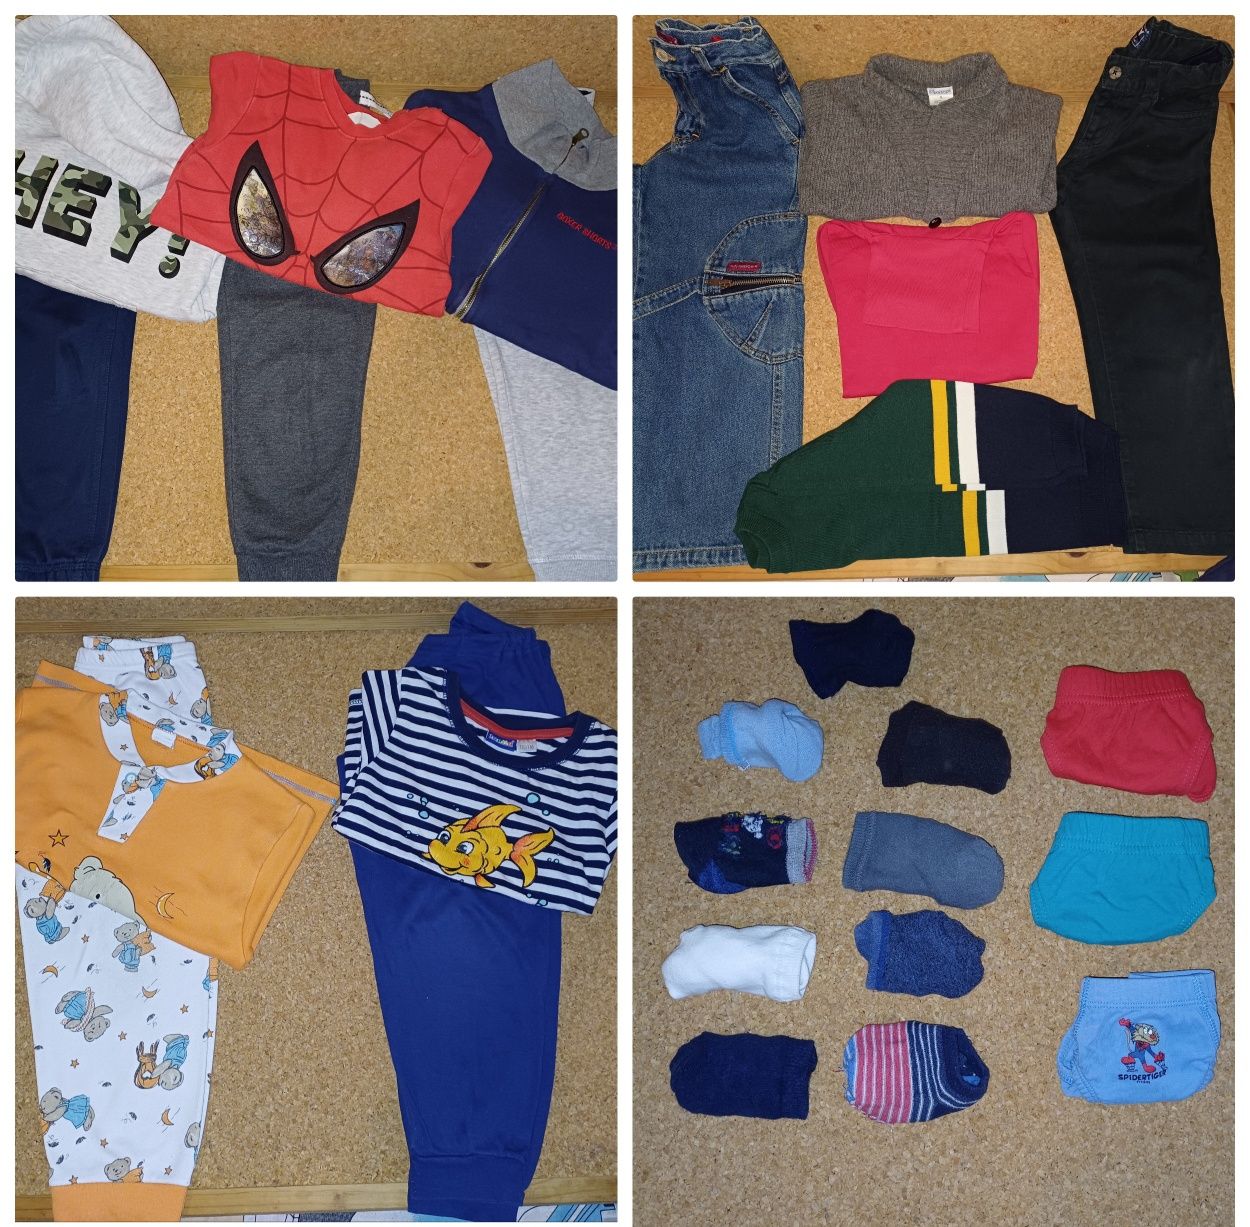 Conjunto de 27 roupas variadas 3/4 anos menino. Bom estado.